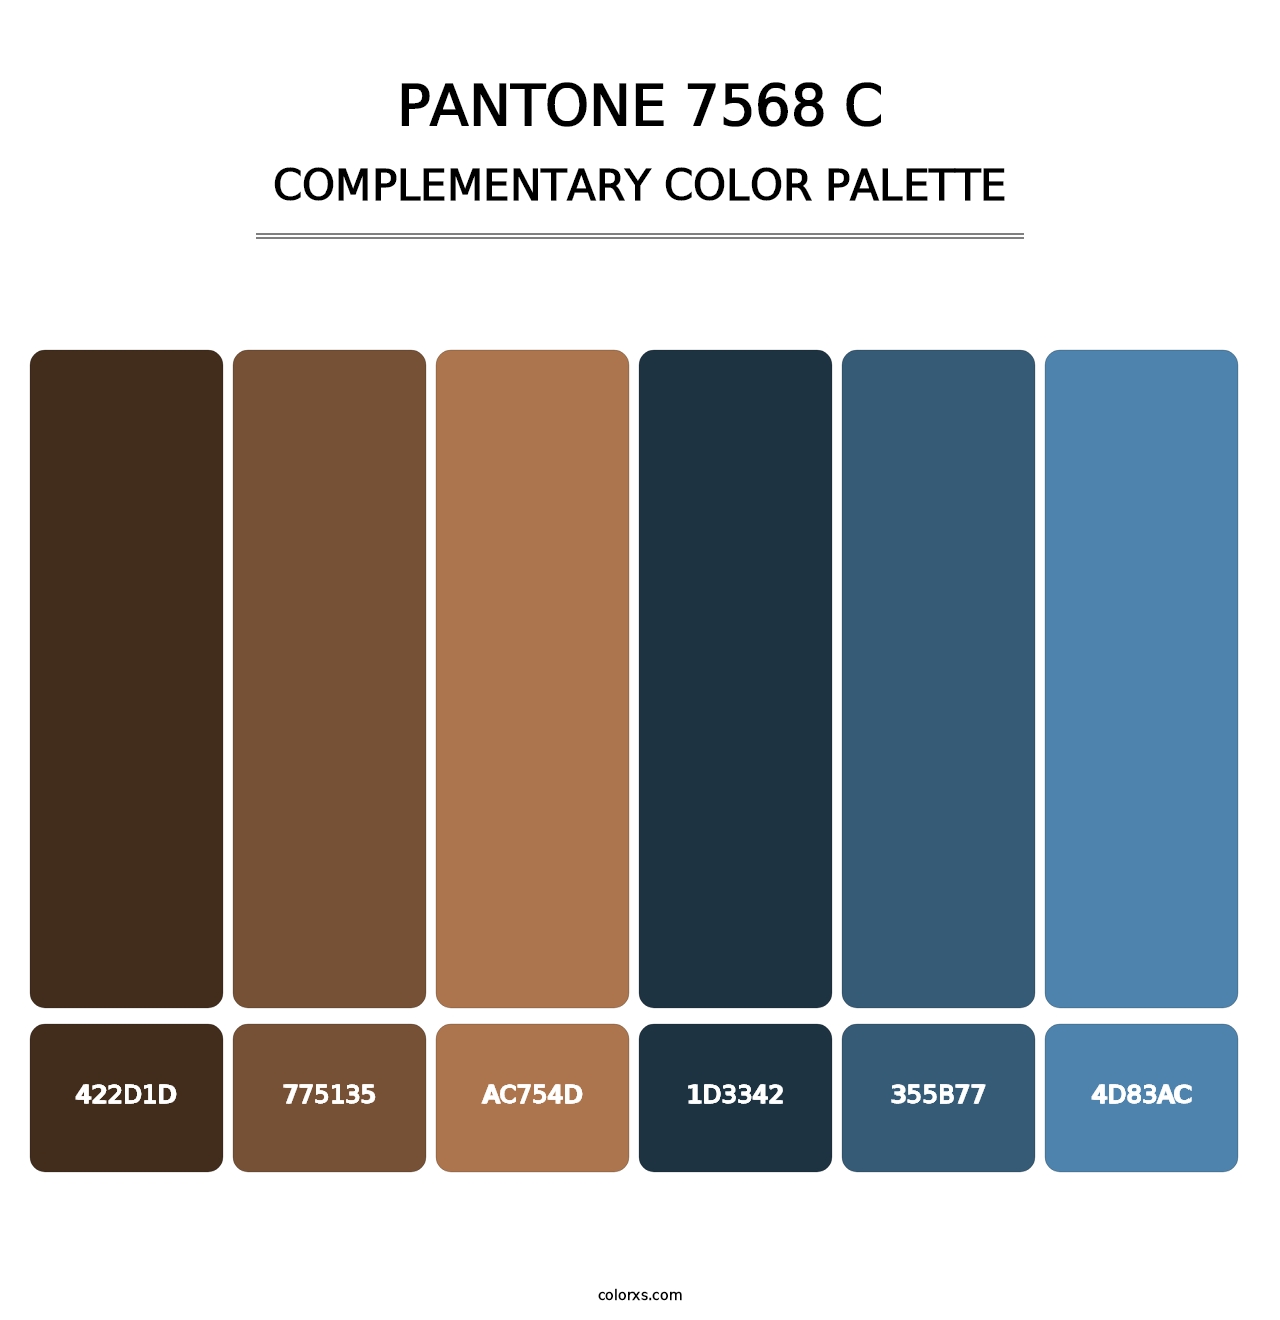 PANTONE 7568 C - Complementary Color Palette